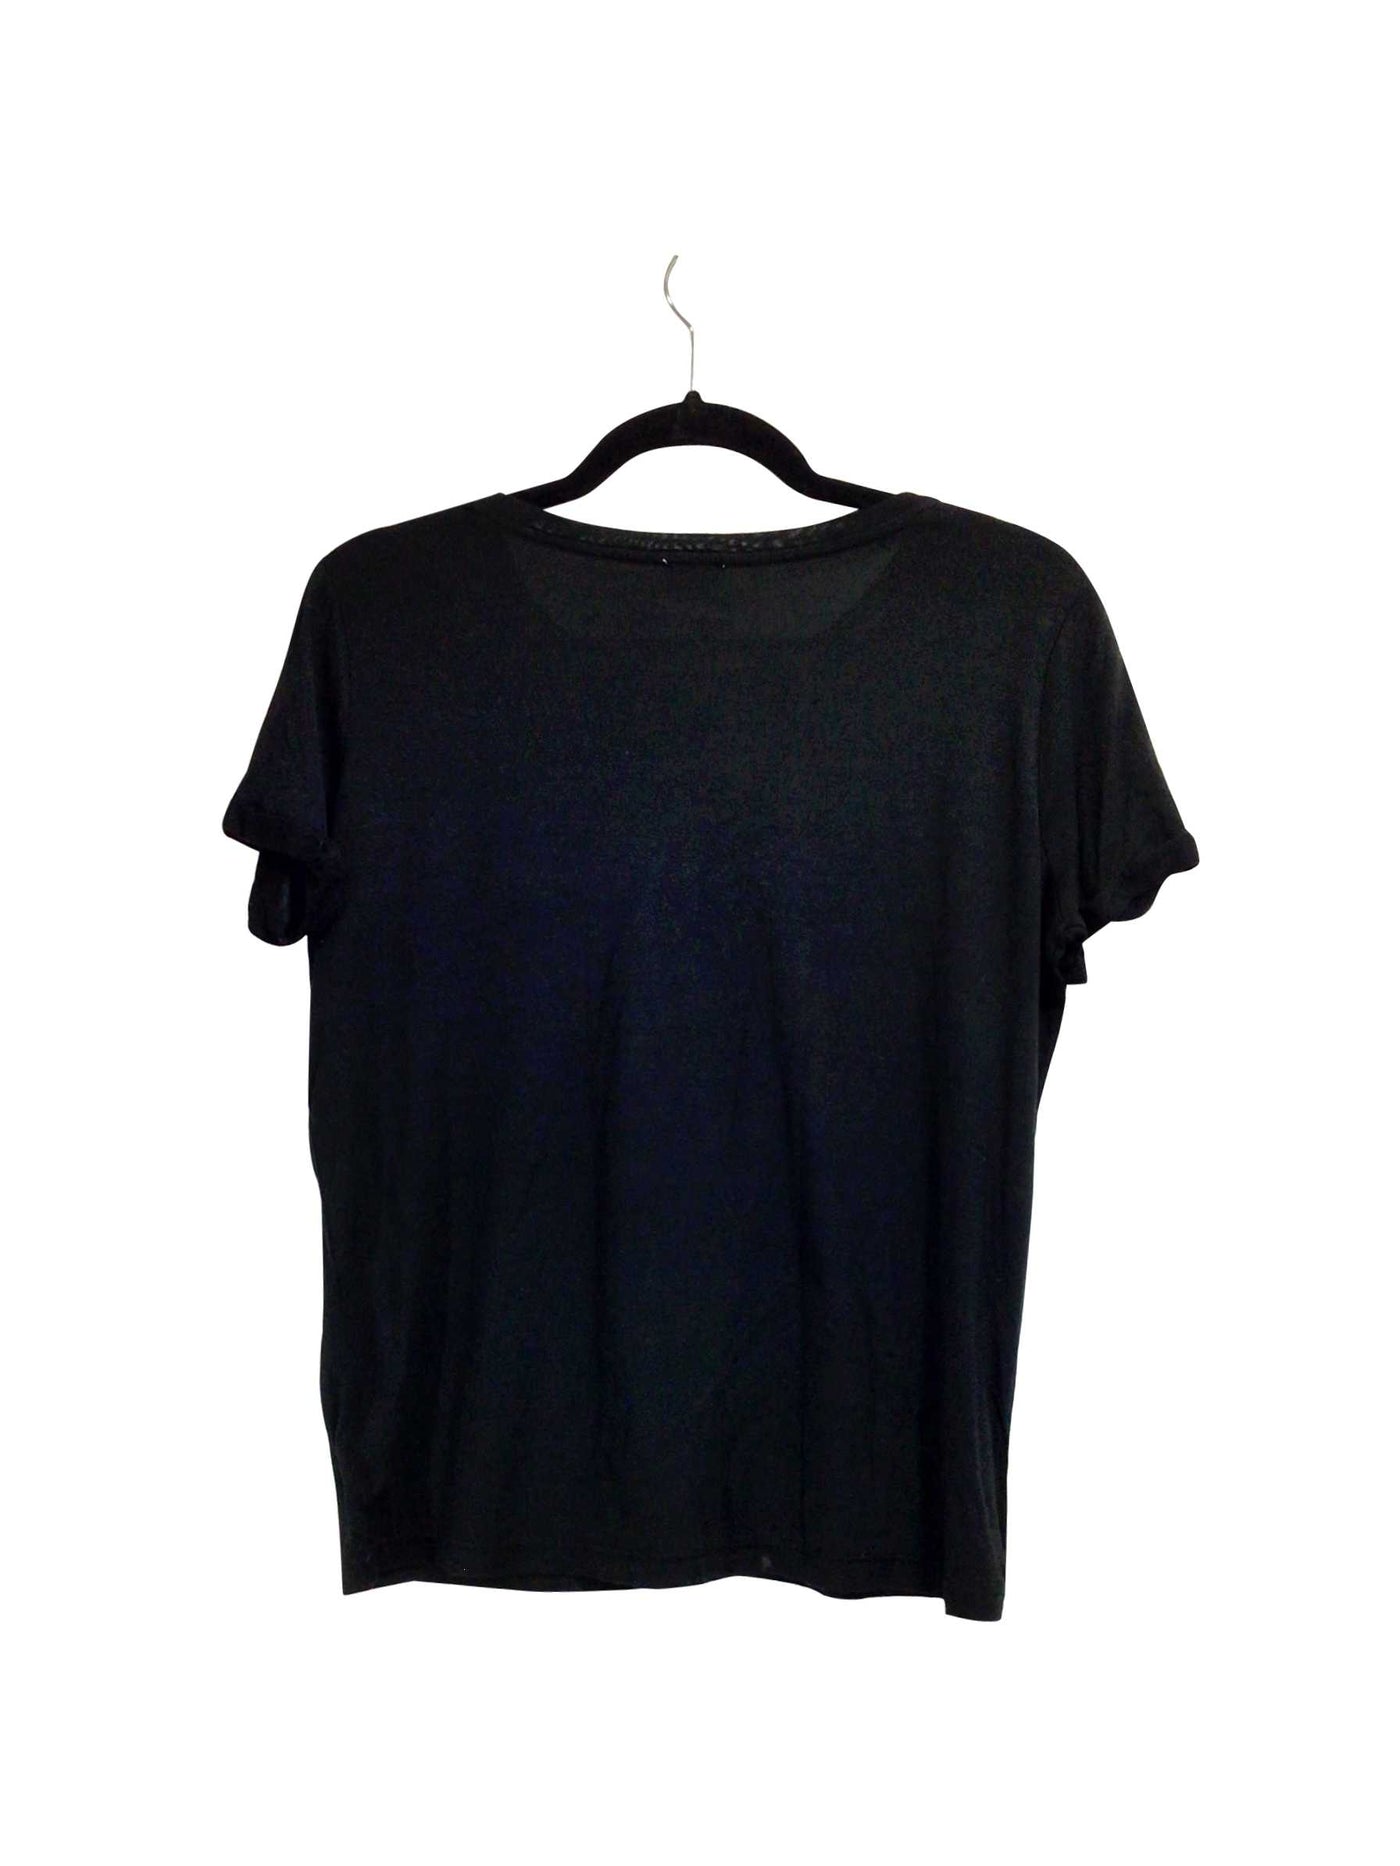 COLLECTION PINKIE Regular fit T-shirt in Black  -  S  15.00 Koop